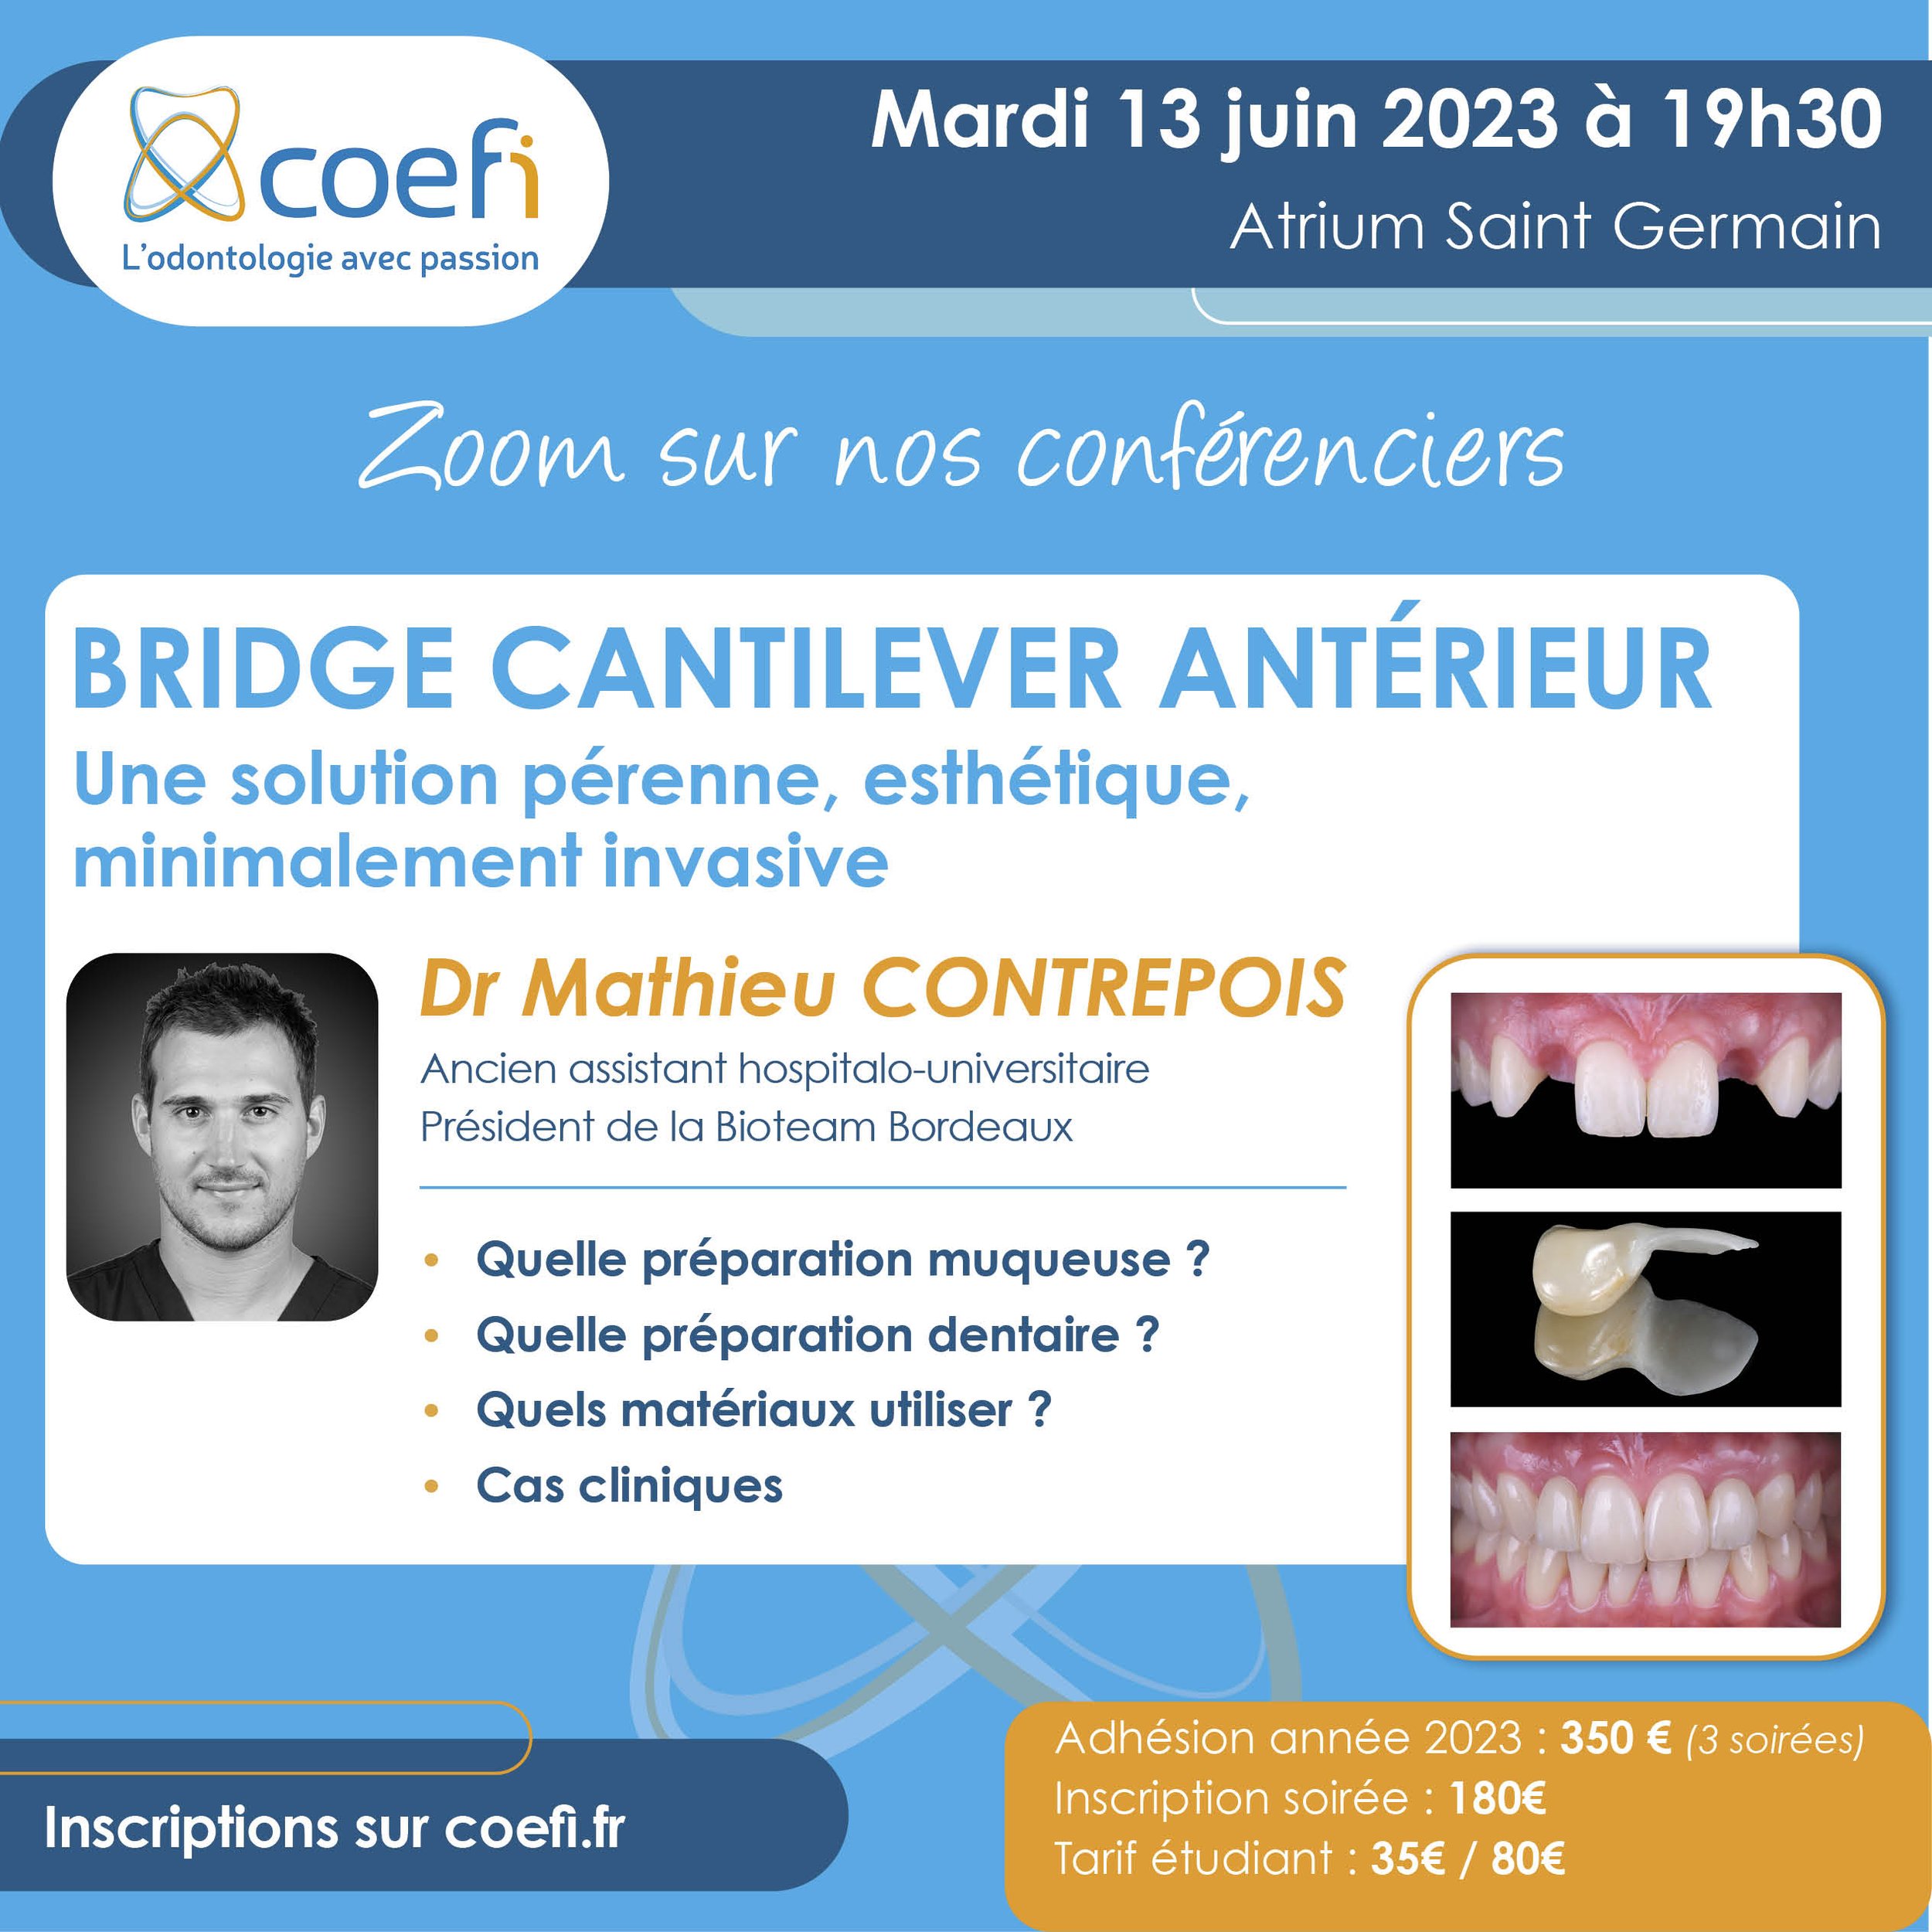 COEFI soiree juin 2023 visuel carre Mathieu Contrepois.jpg